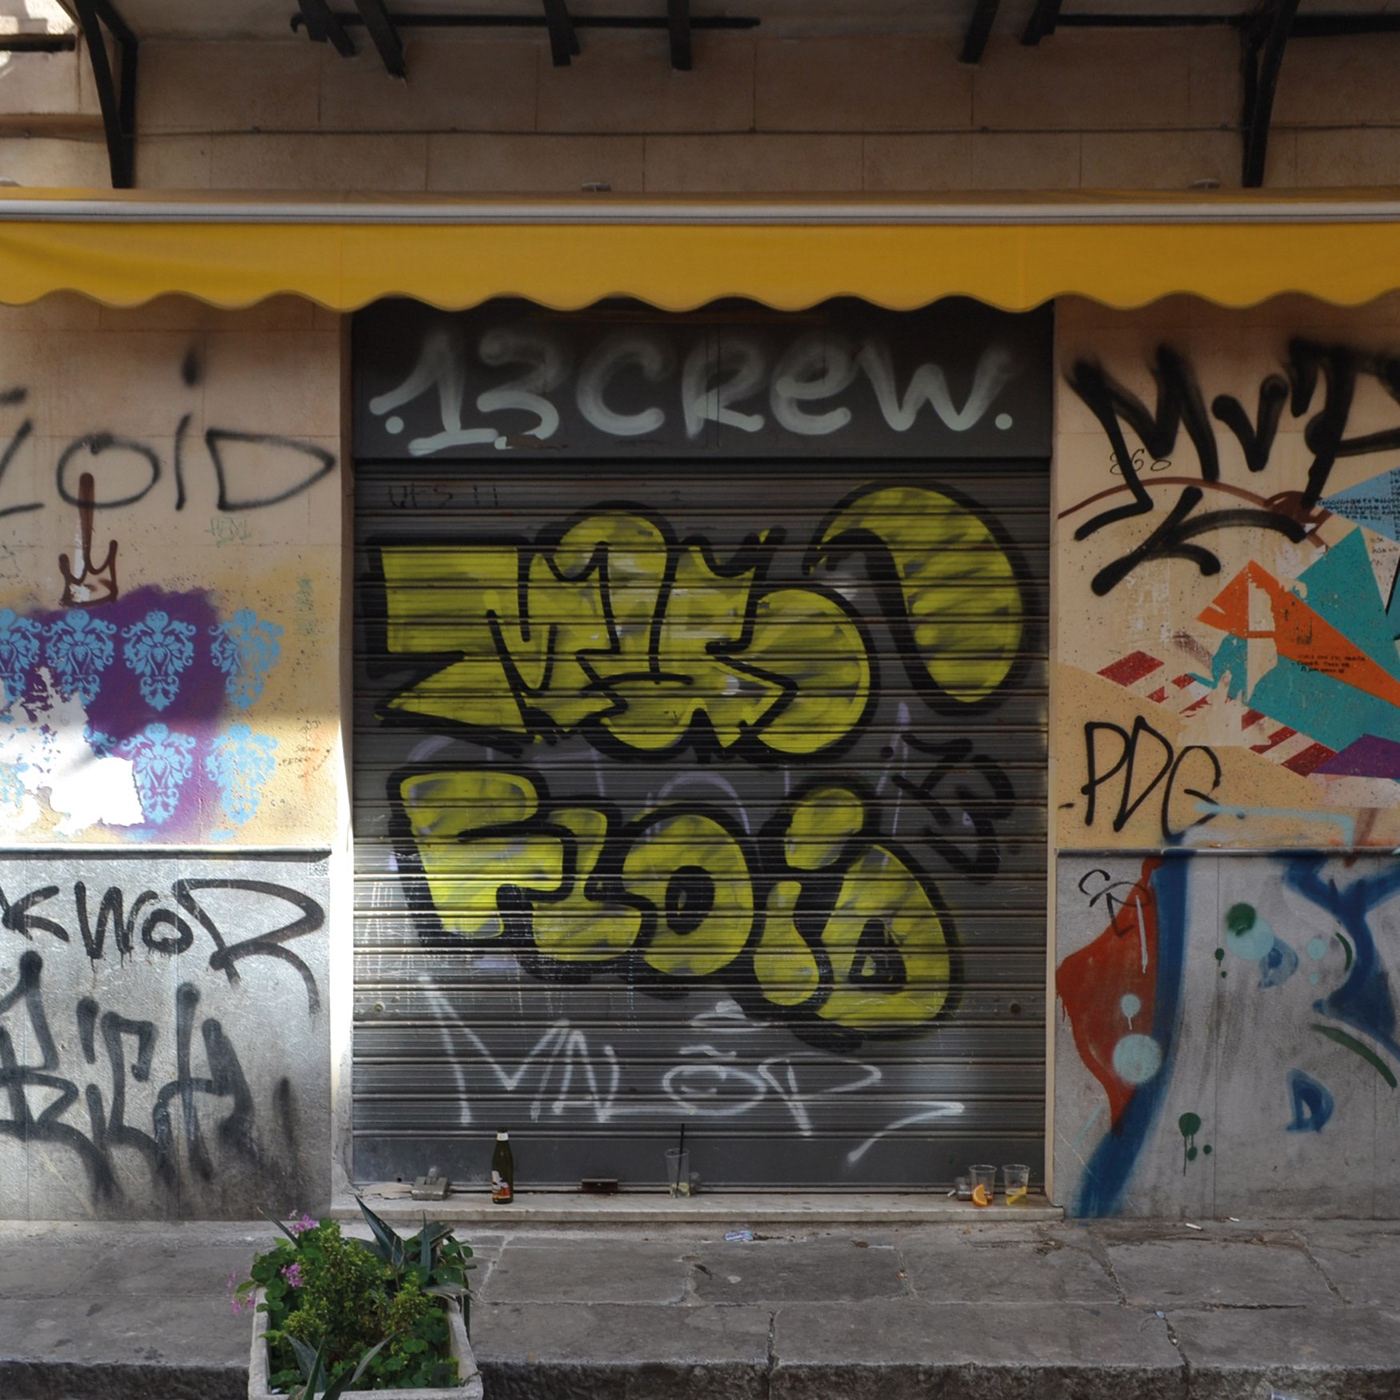 Italy Palermo door Graffiti art gates